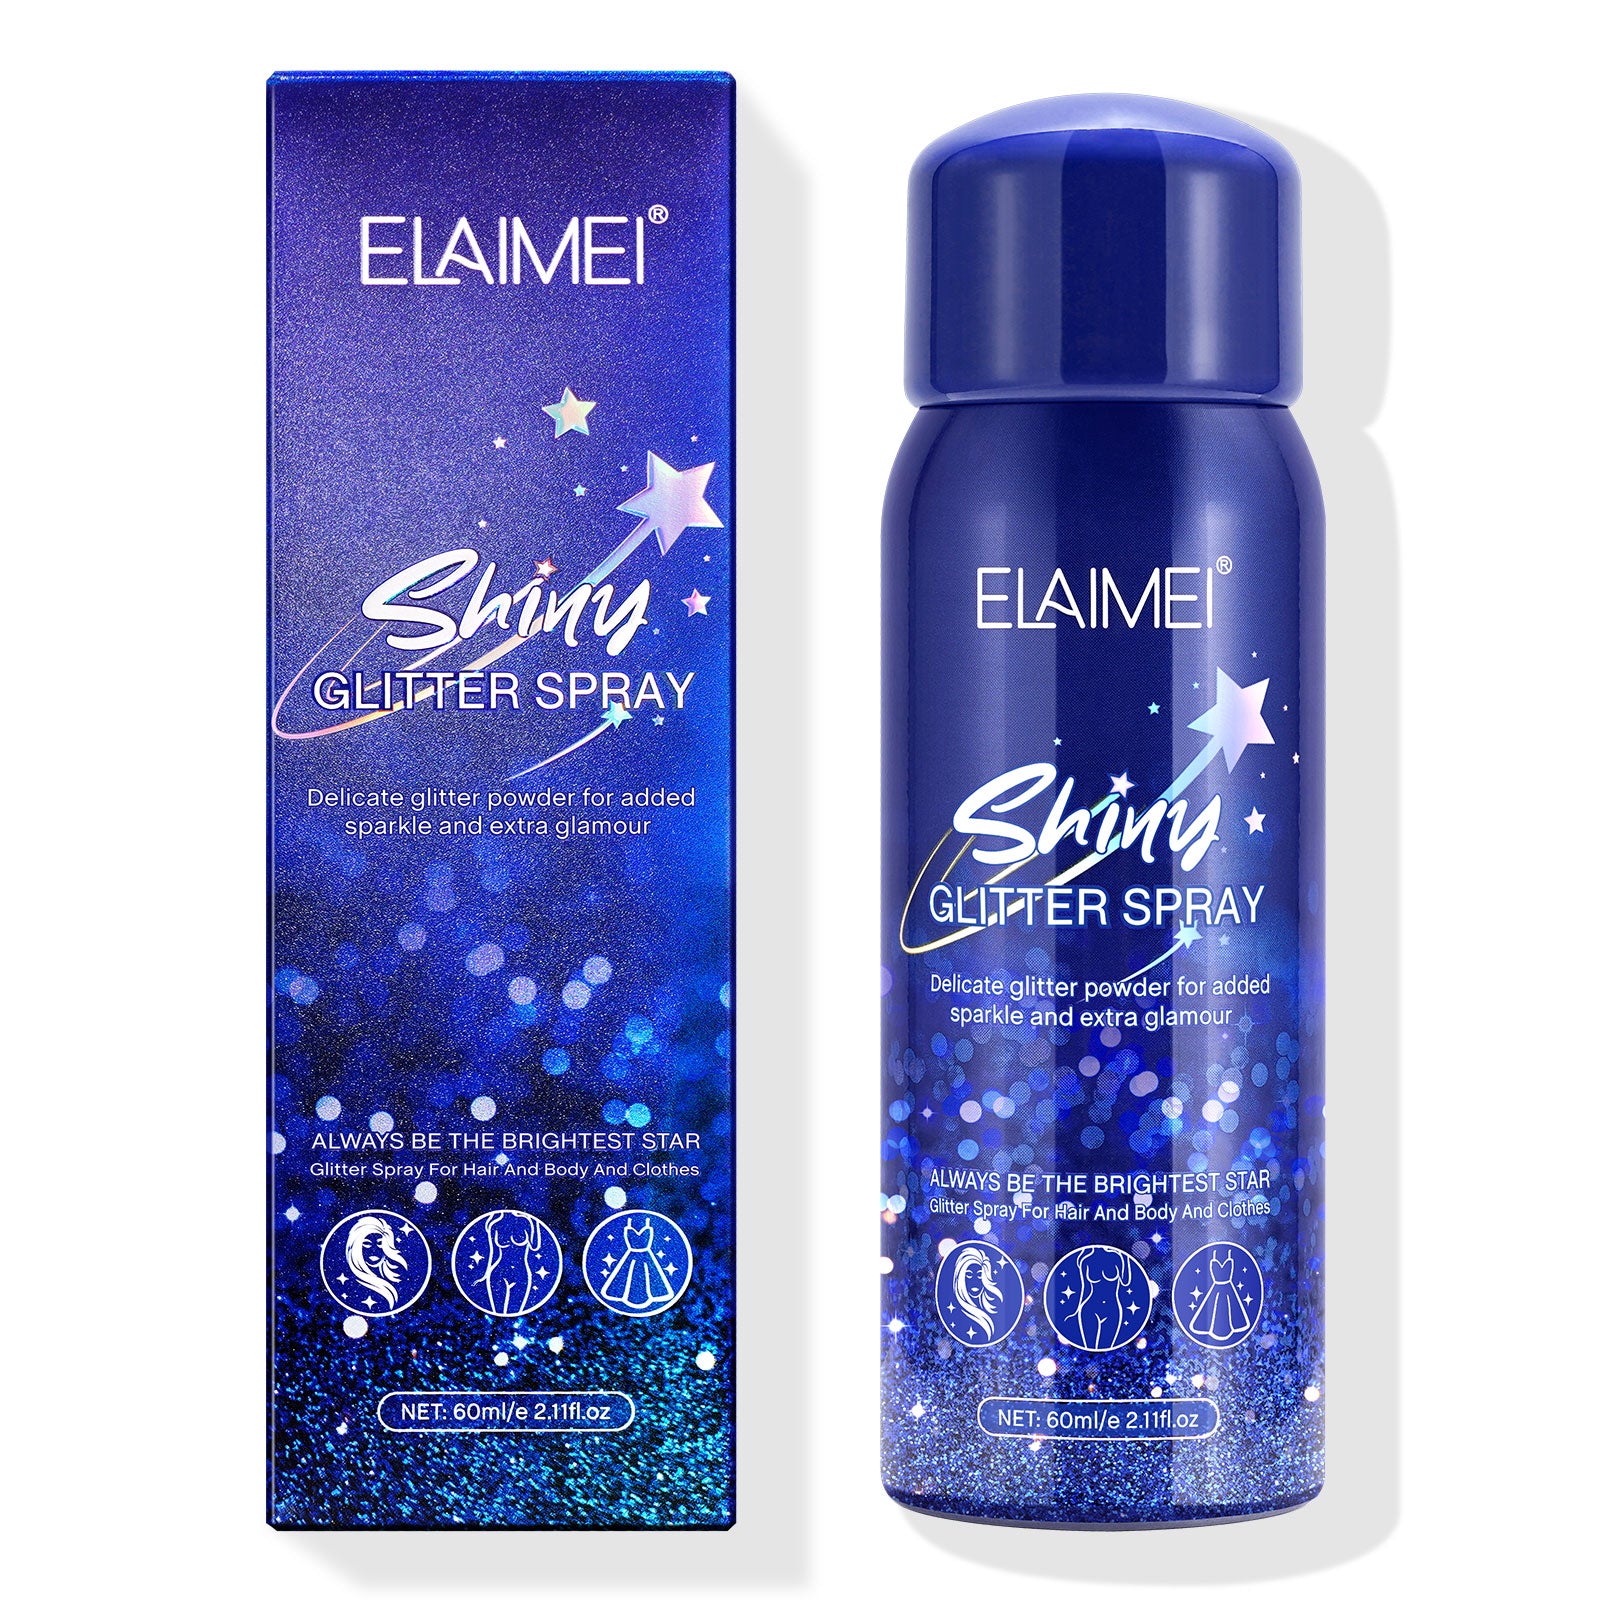 Body & Hair Glitter Spray, Quick-Drying, Long-Lasting, for Makeup & Festivals